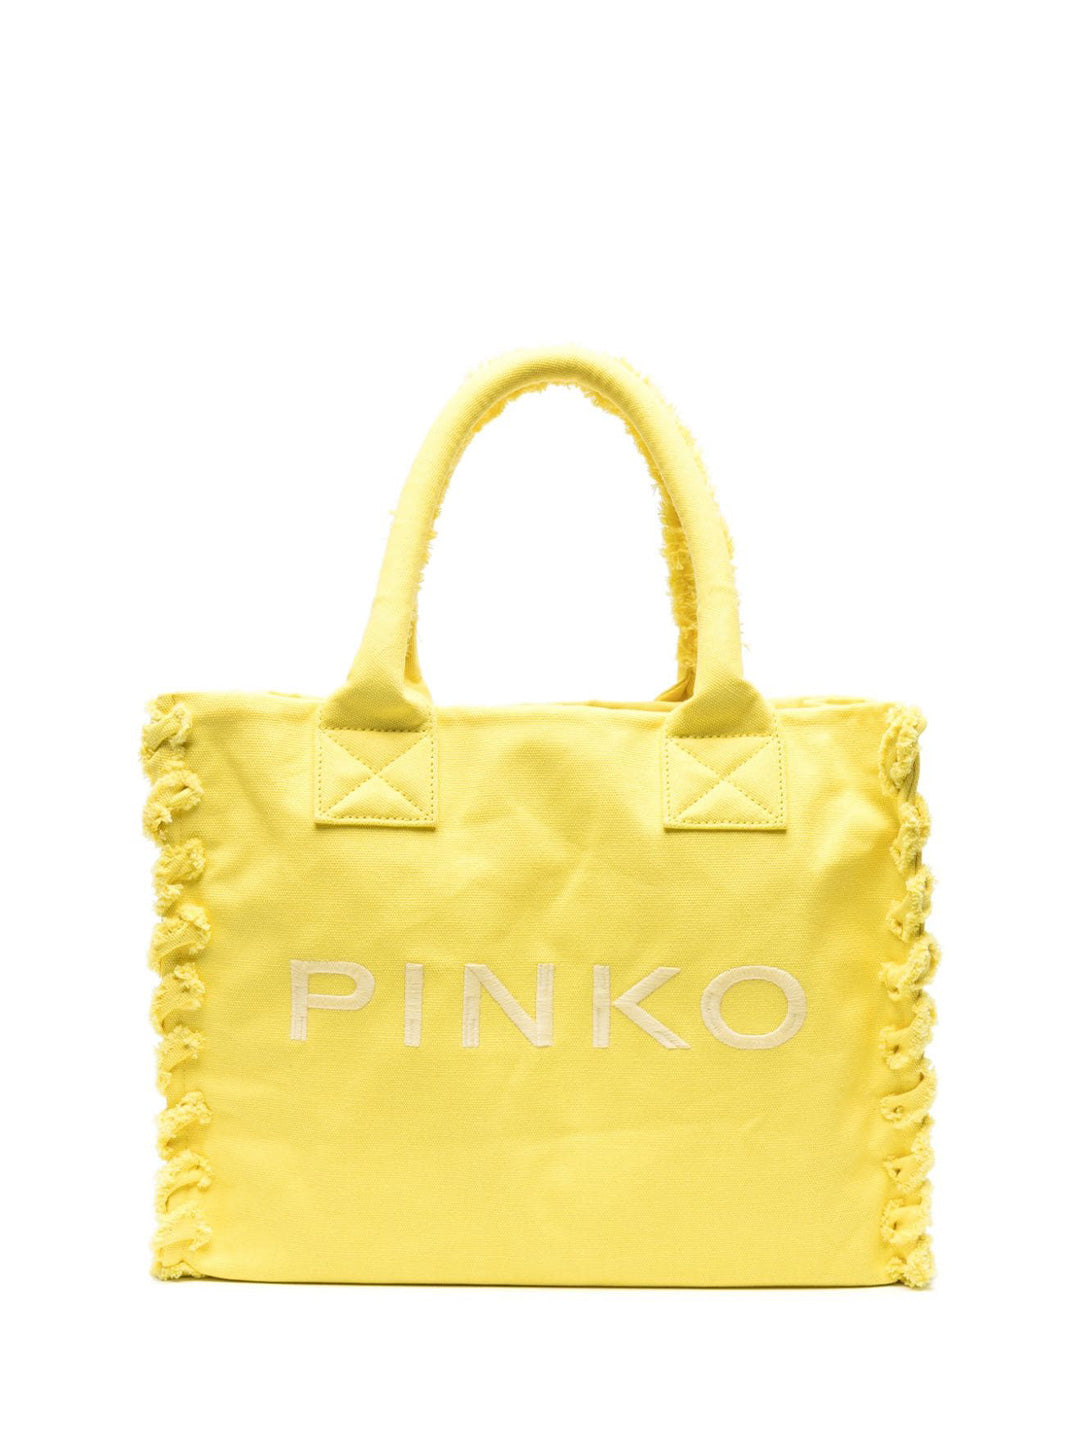 Pinko Beach Shopping borsa giallo in tela